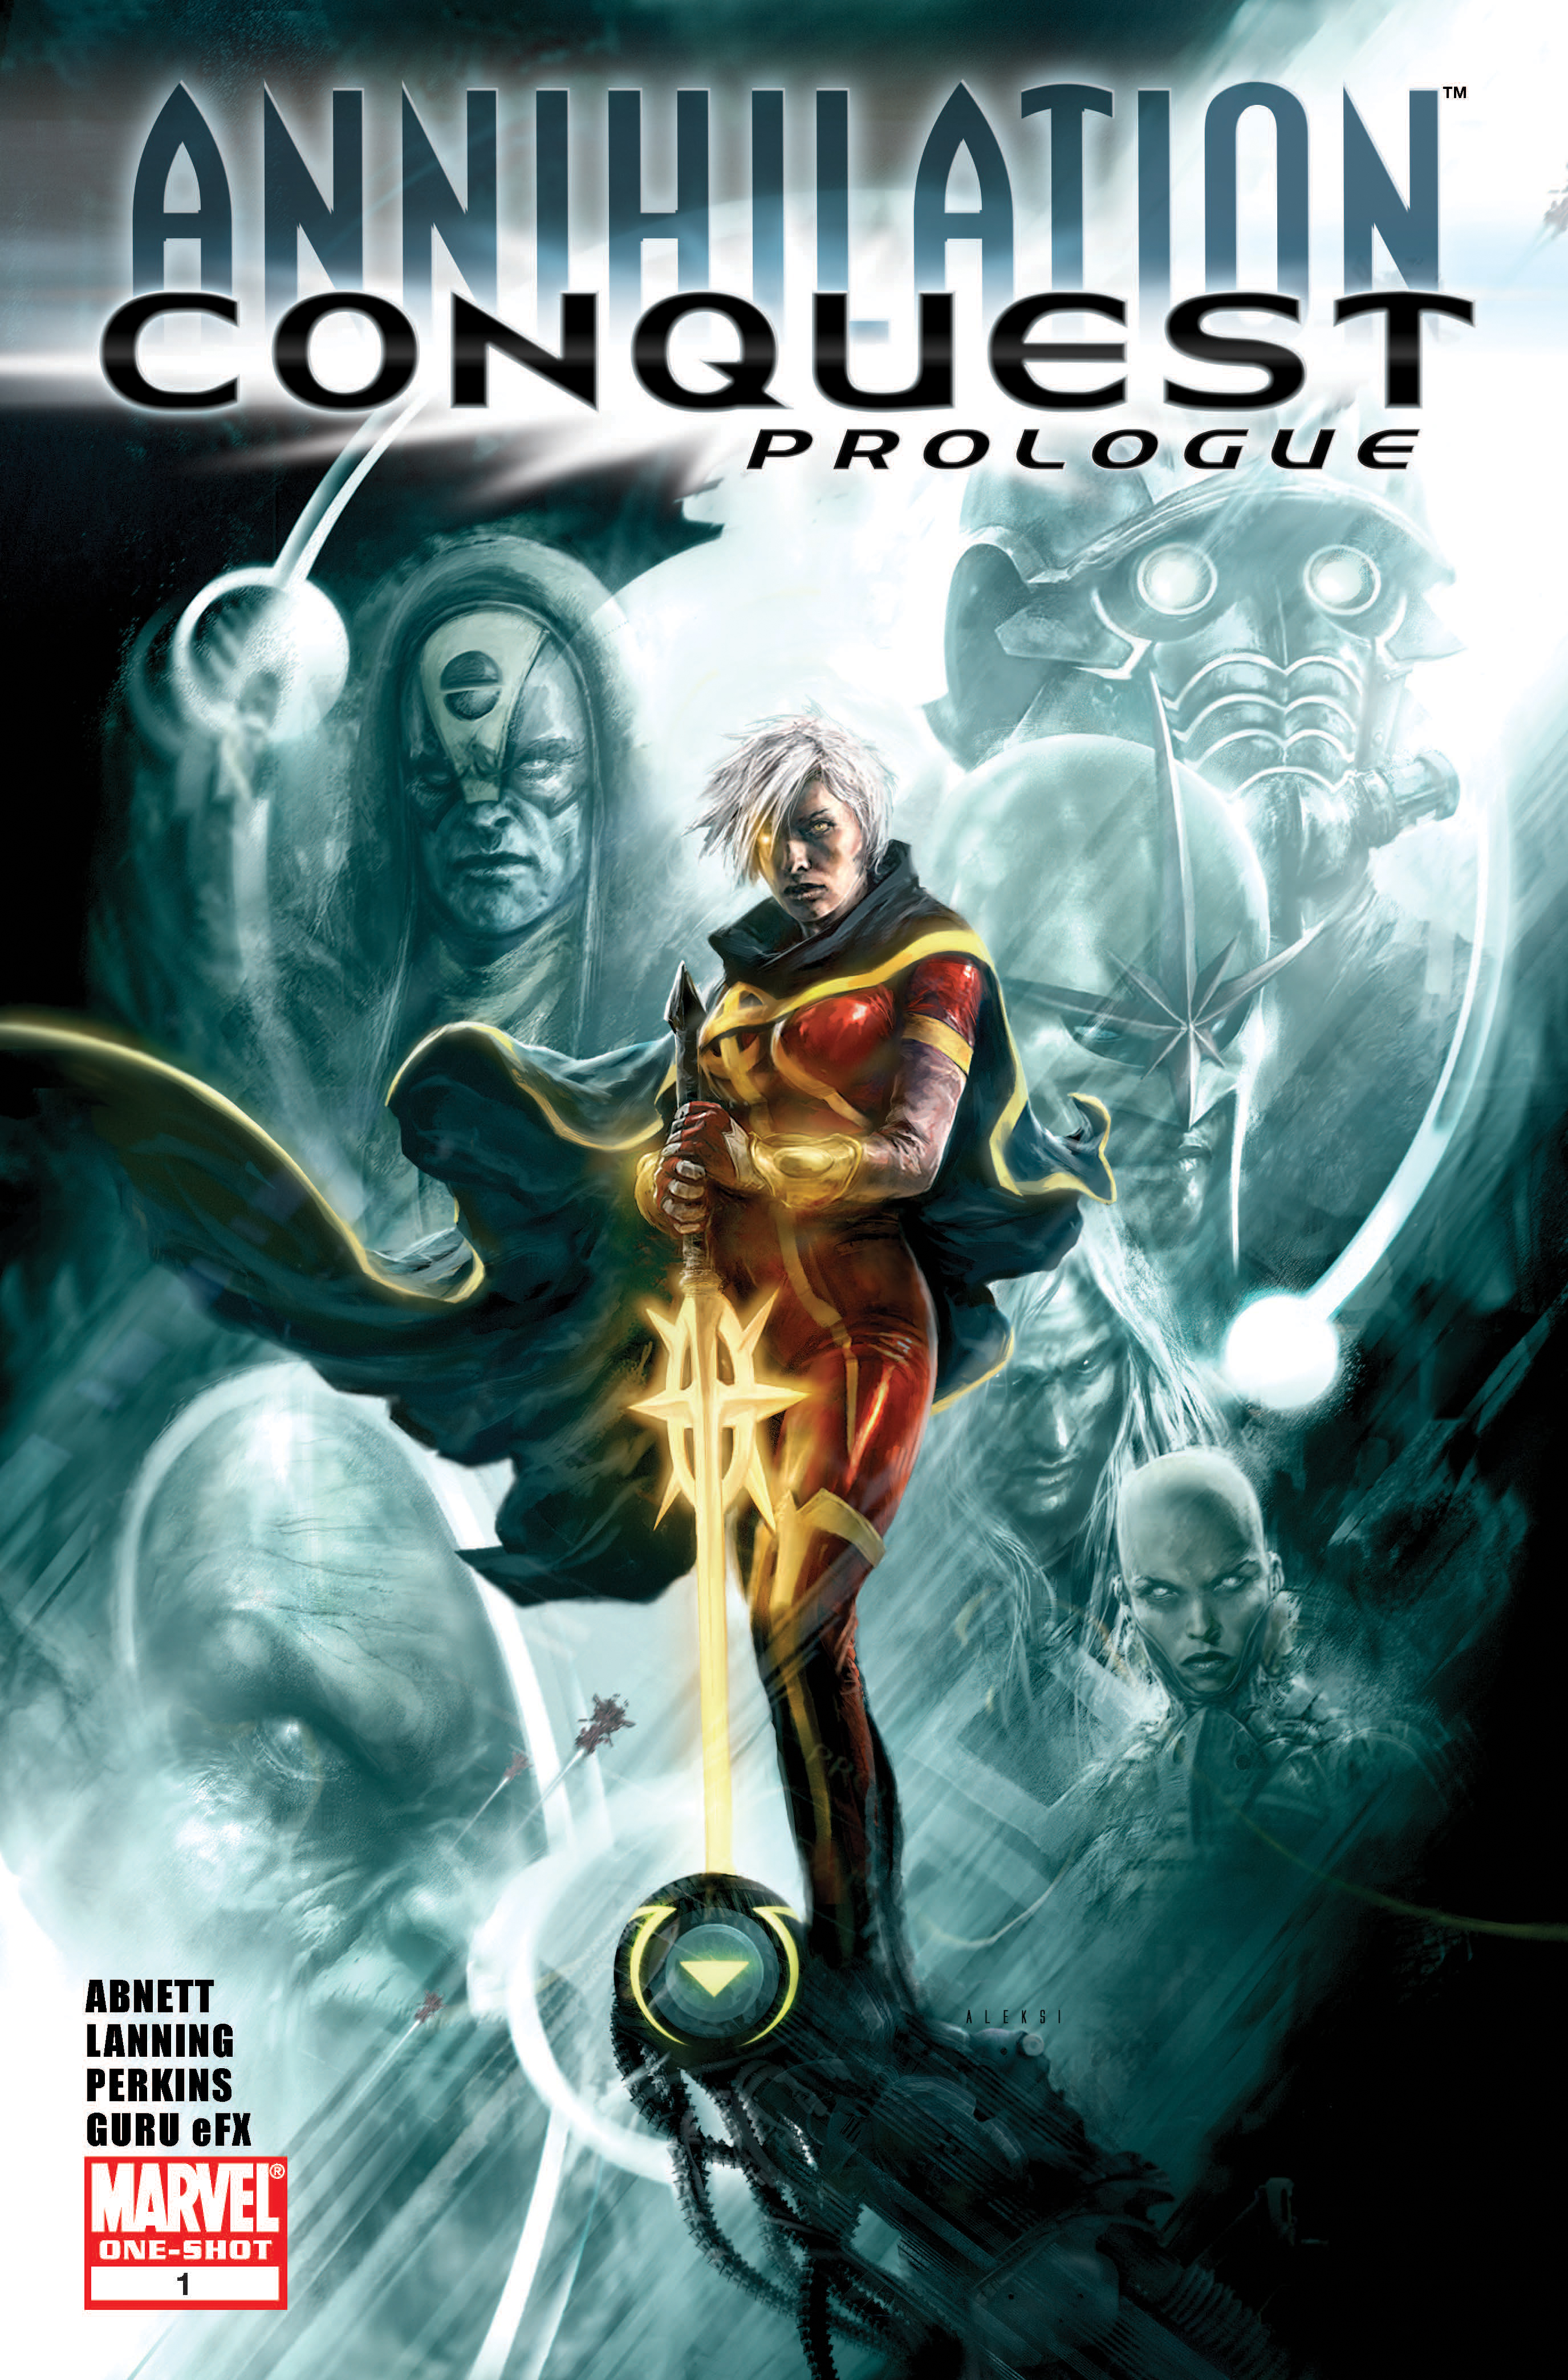 Giant Killing Dark hero Volume 1 Prologue